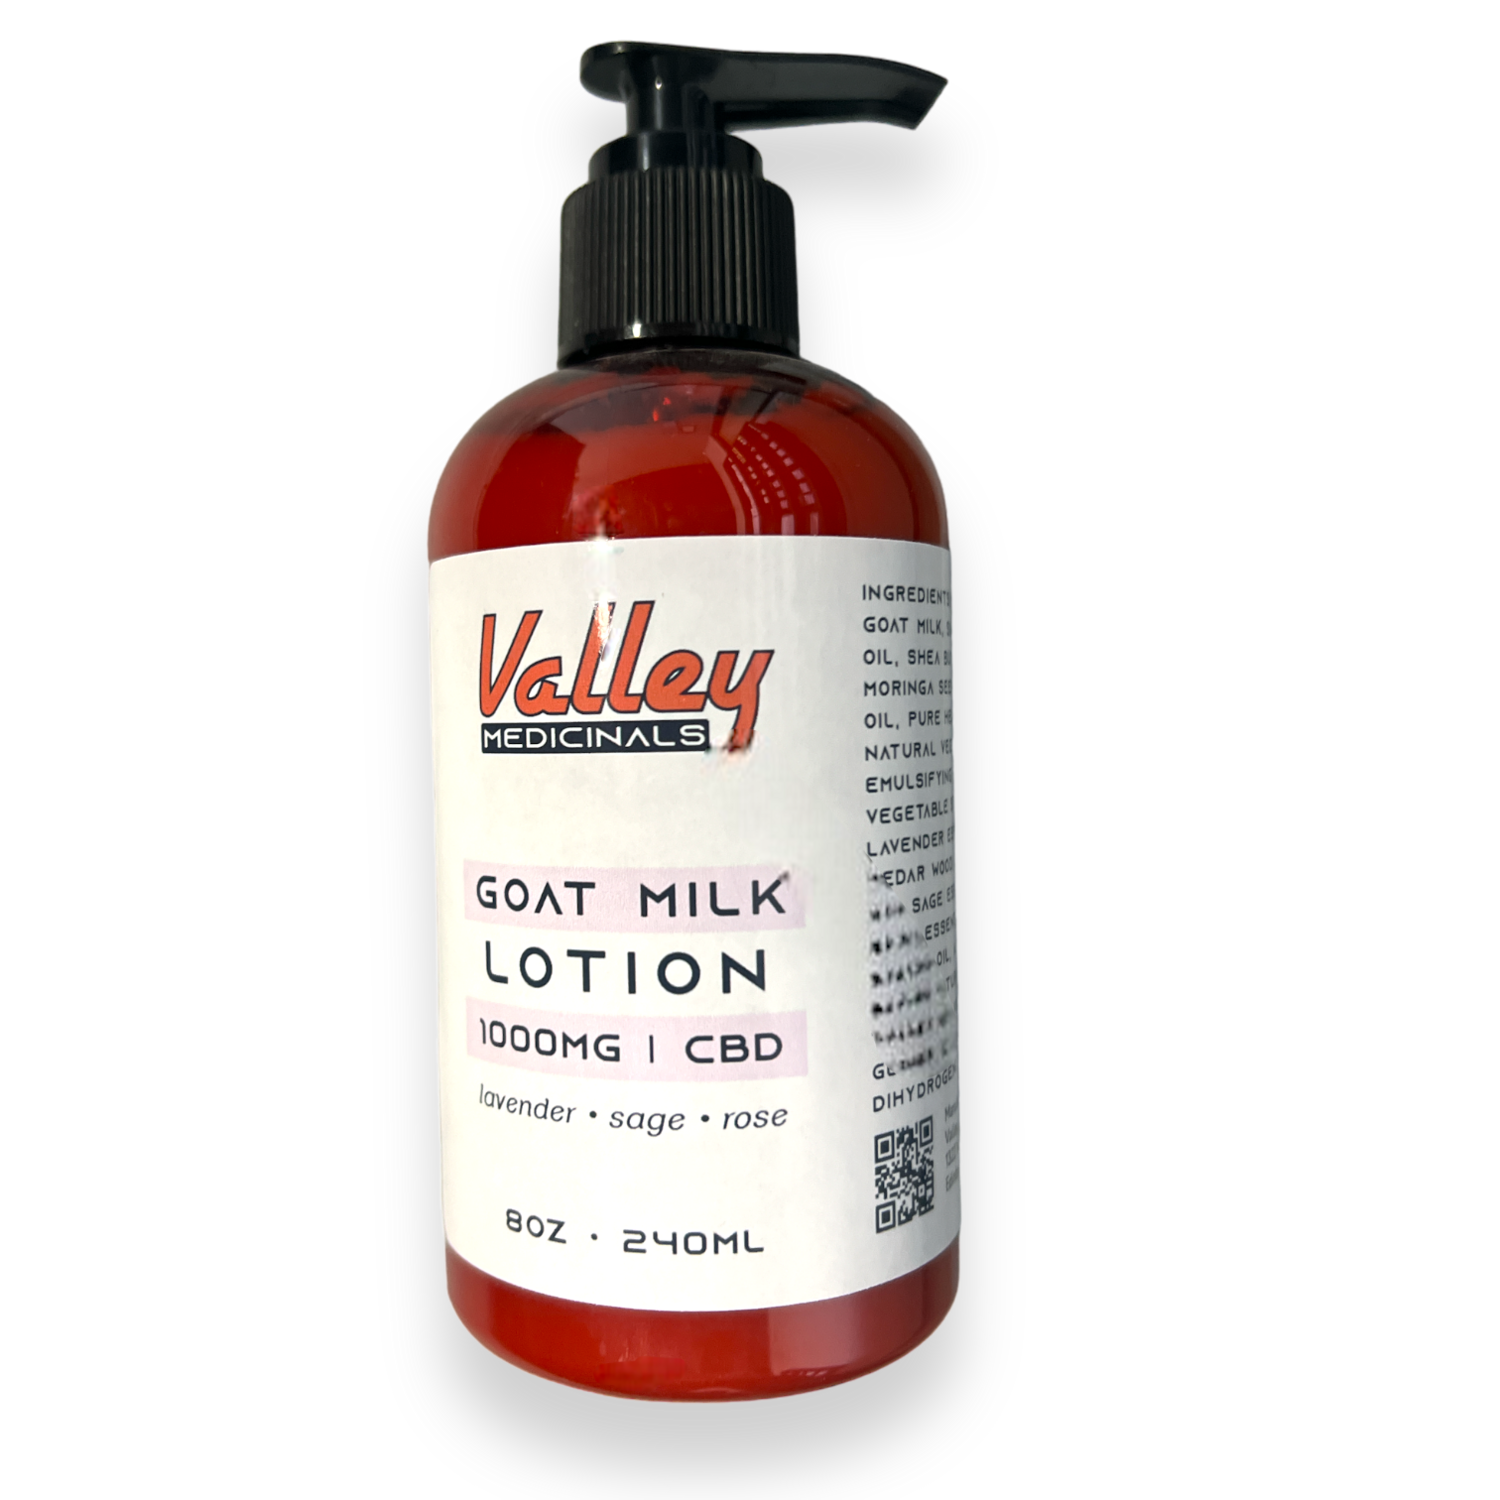 Valley Medicinals’ CBD Goat Milk Lotion 1000MG